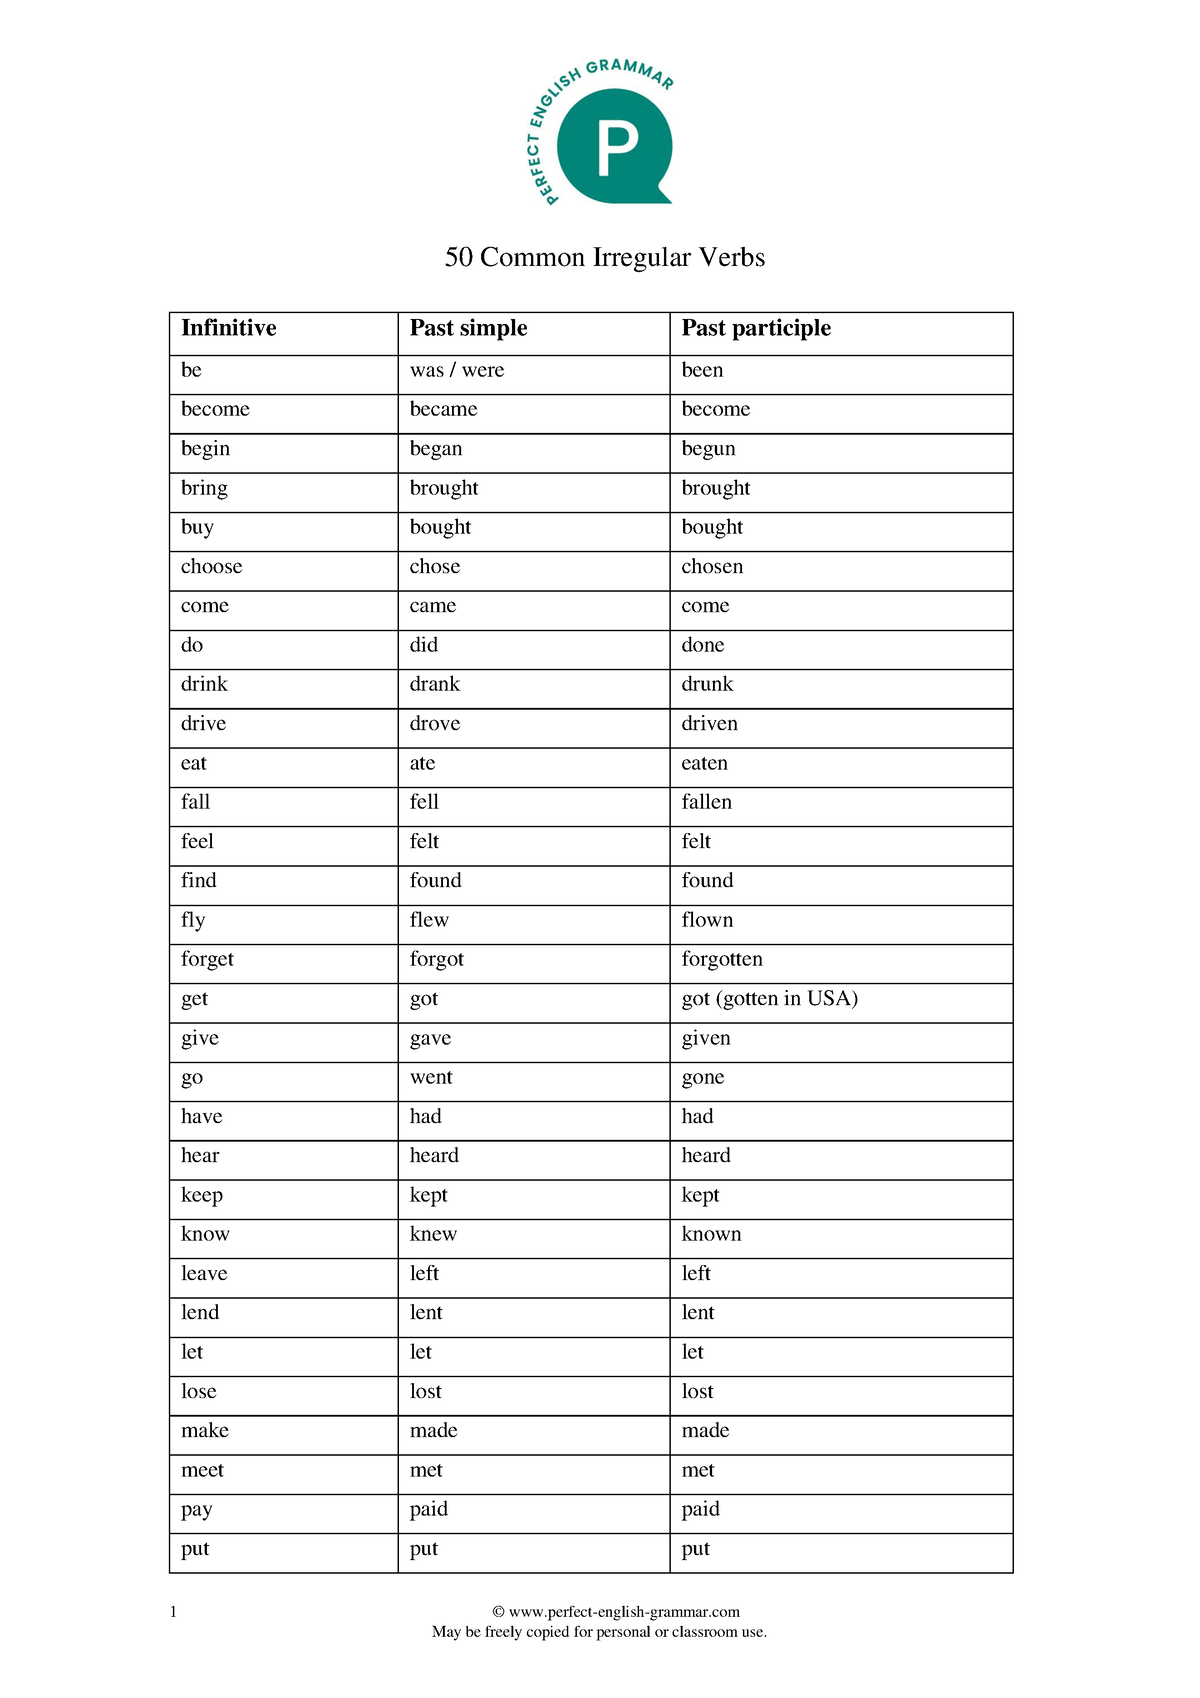 50 Common Irregular Verbs List 1 Perfect english grammar May Be 